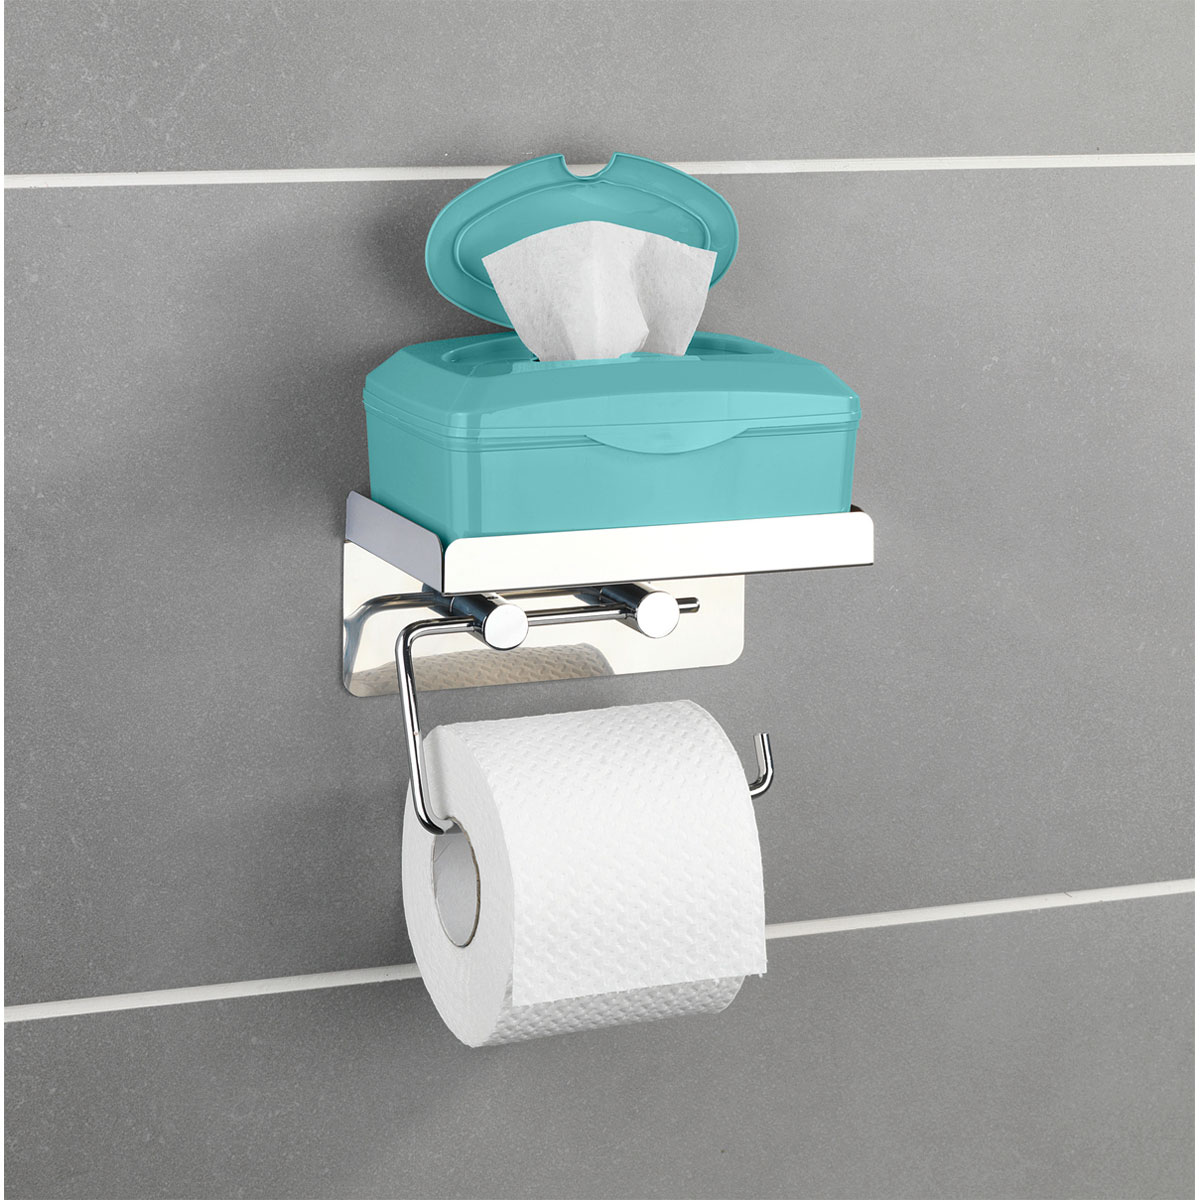 Wenko Toilettenpapierhalter 2 in 1 Edelstahl rostfrei | 514880 | Toilettenpapierhalter